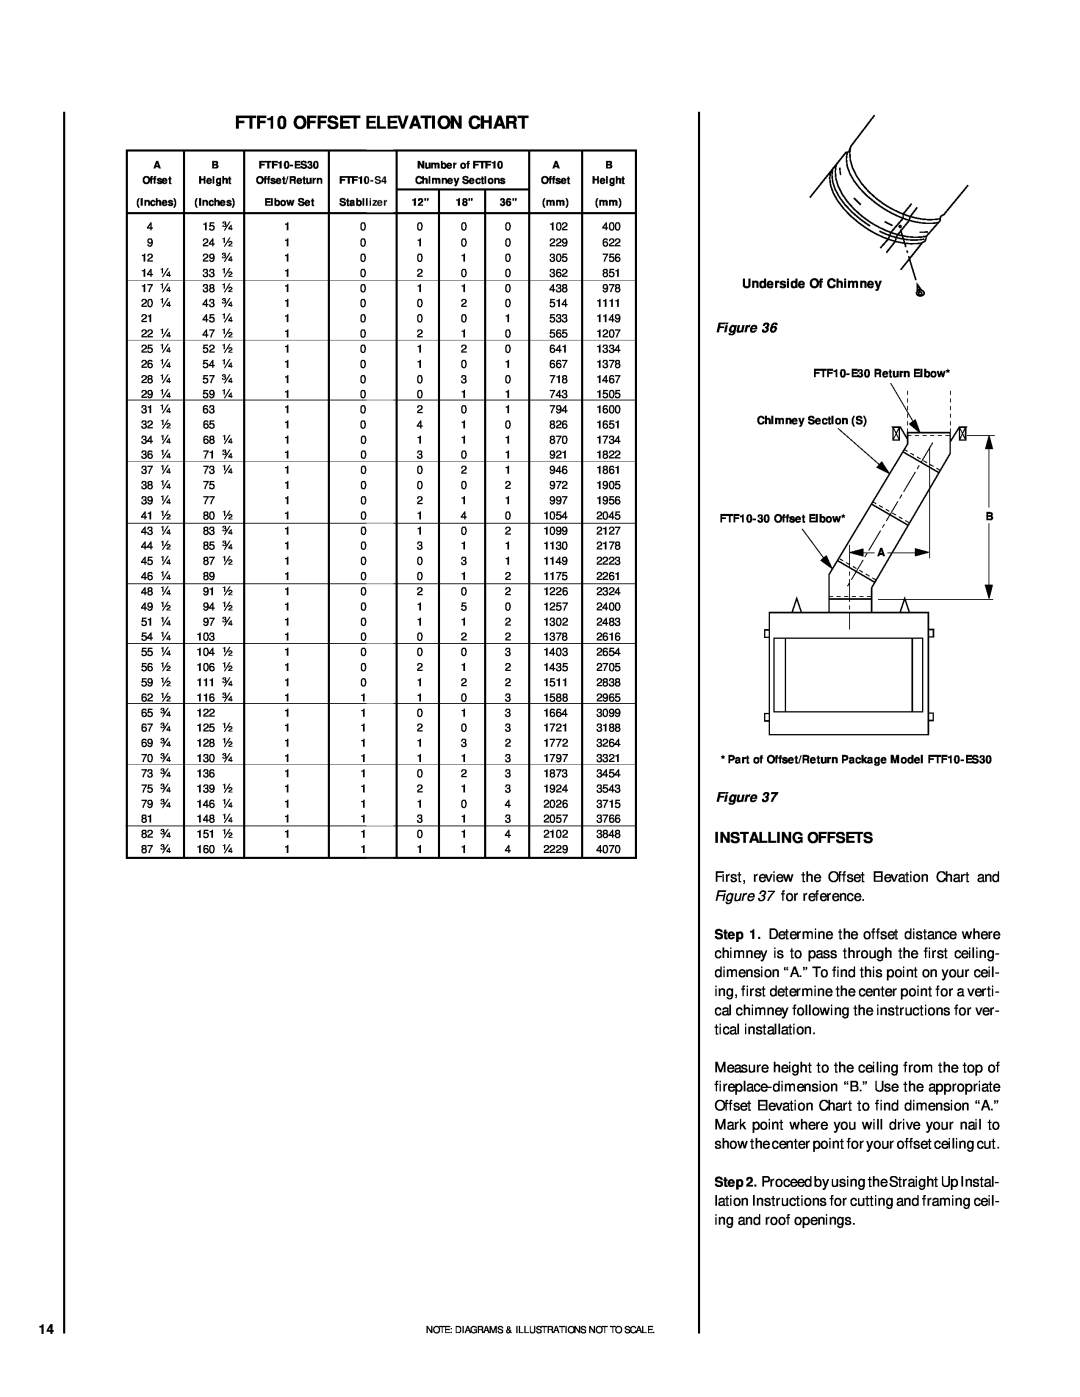 Lennox Hearth LSO-43 installation instructions FTF10 OFFSET ELEVATION CHART, Installing Offsets, Underside Of Chimney 